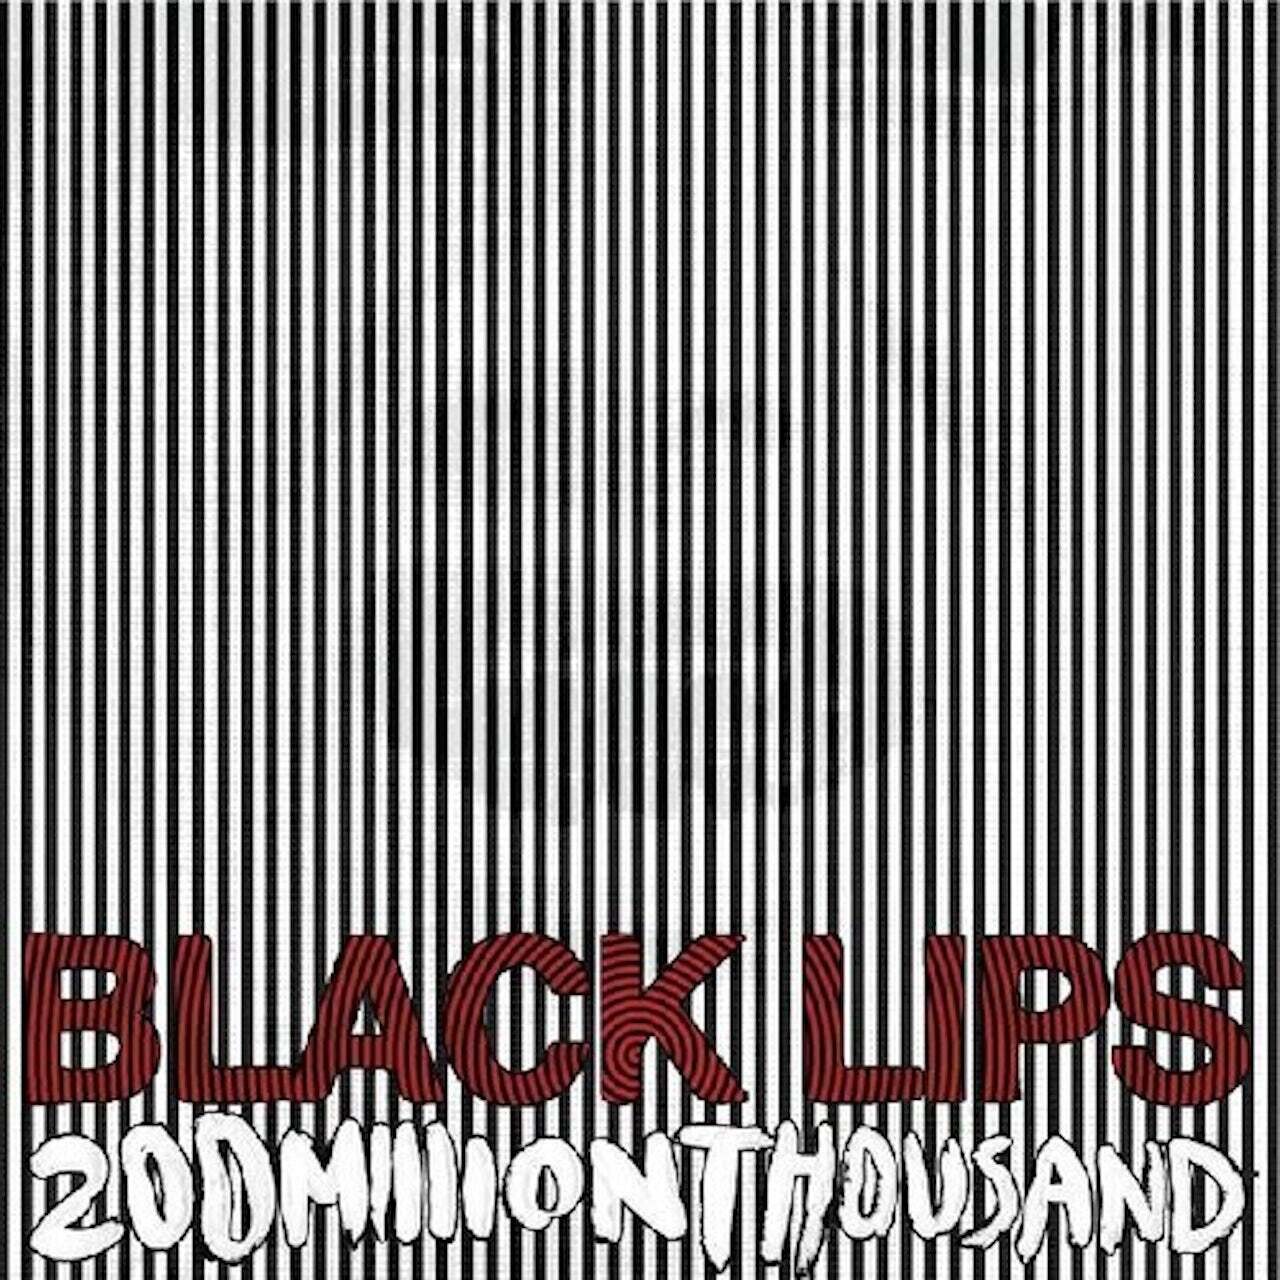 Black Lips / 200 Million Thousand